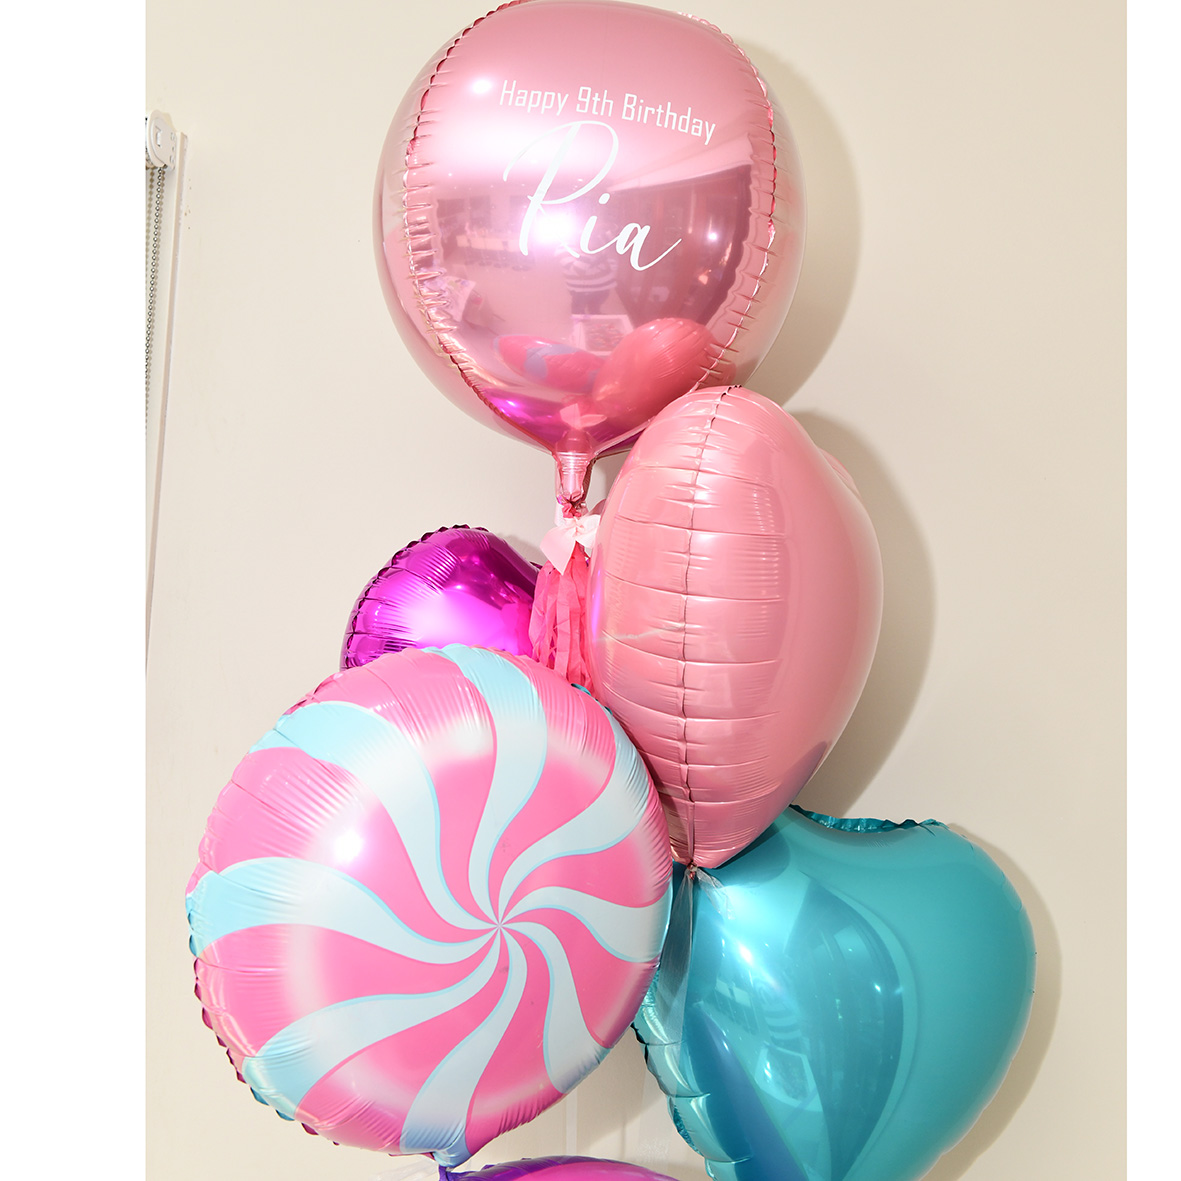 Birthday Cakes & Balloons Sydney Delivery